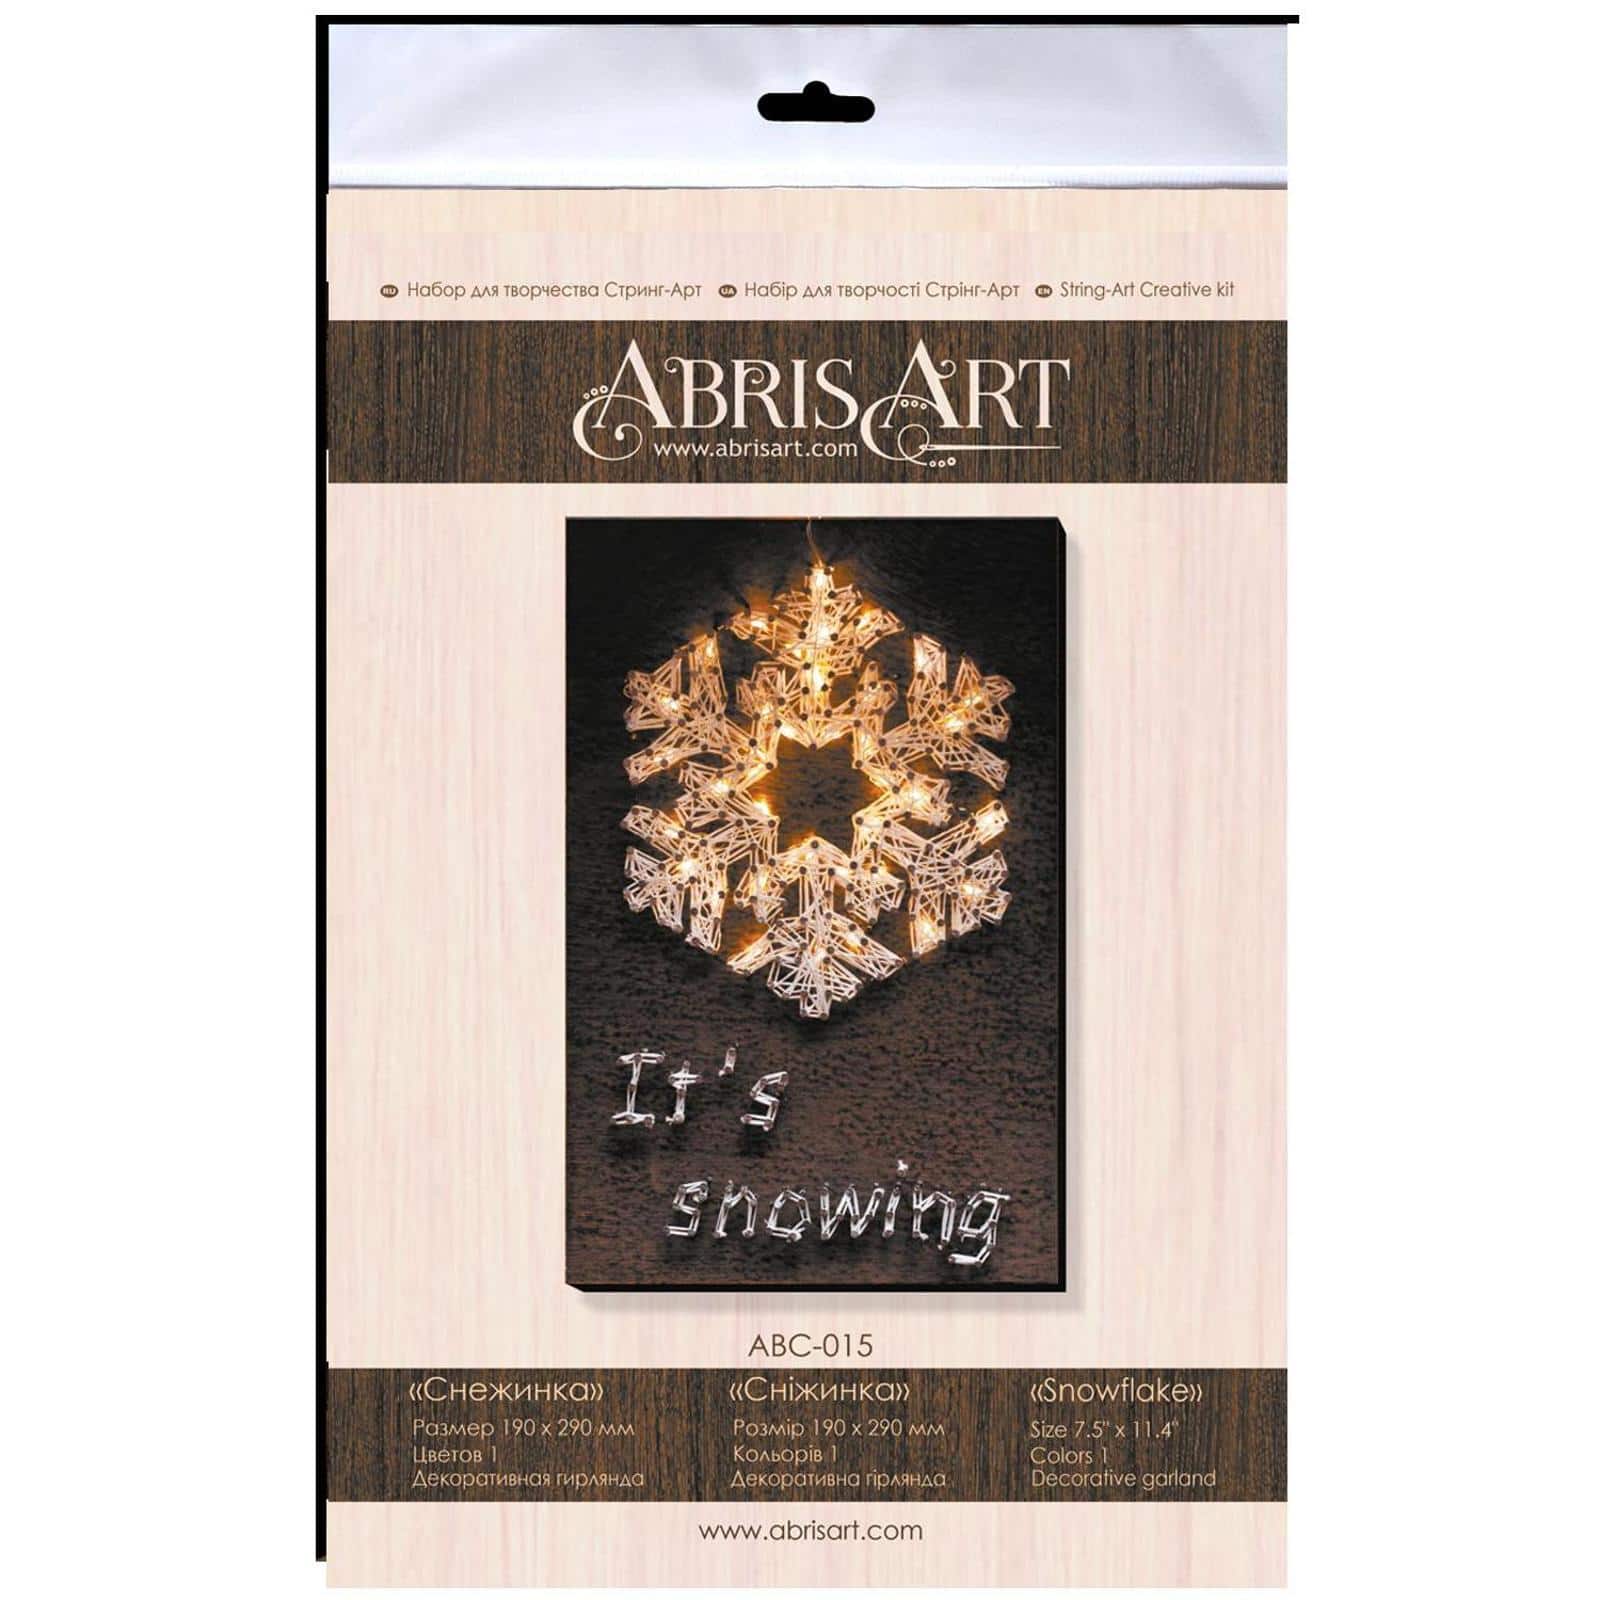 Abris Art Snowflake String Art Creative Kit